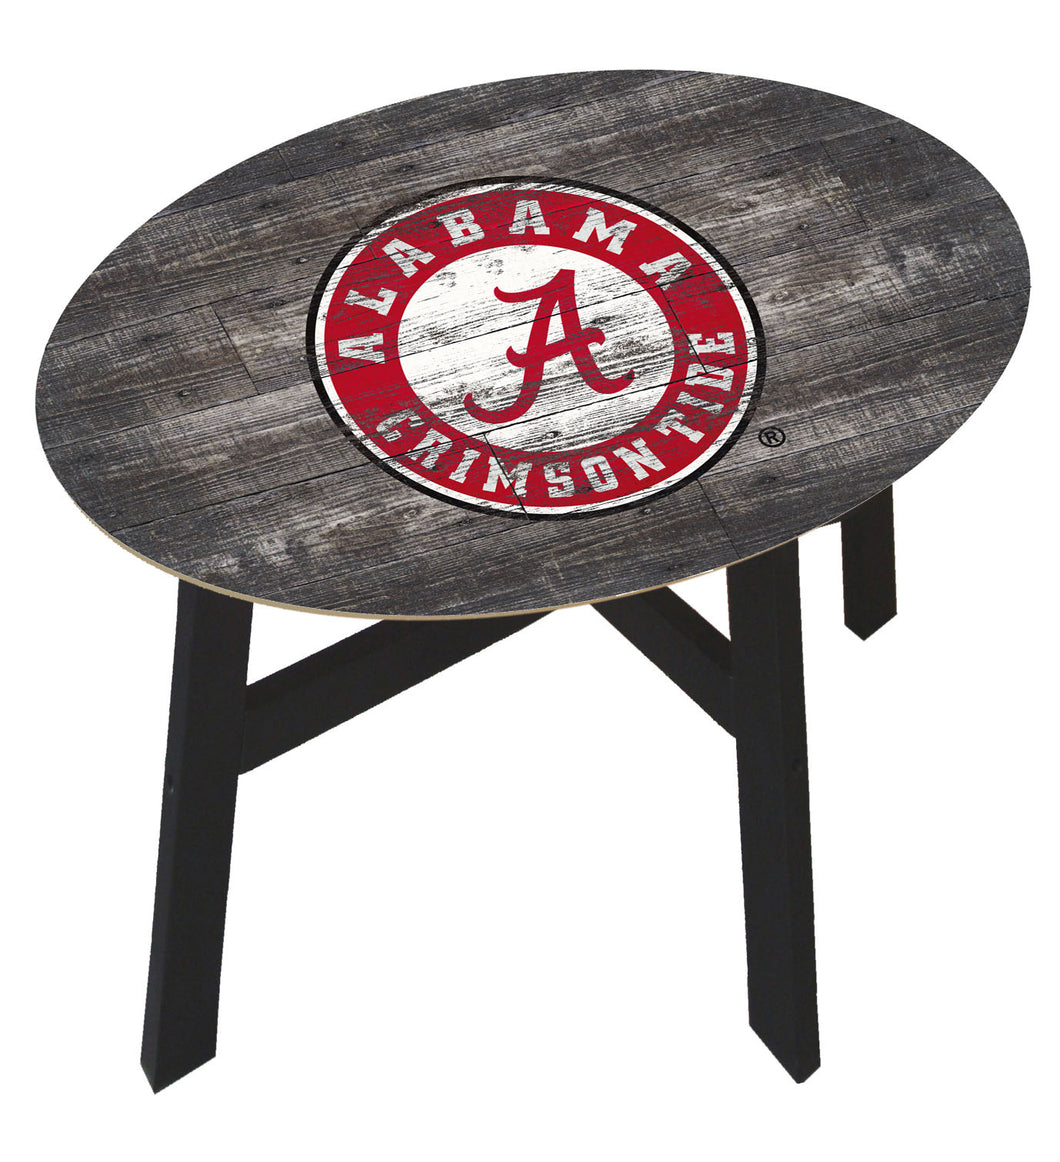 NCAA fan gear Alabama Crimson Tide state distressed wood side table from Sports Fanz